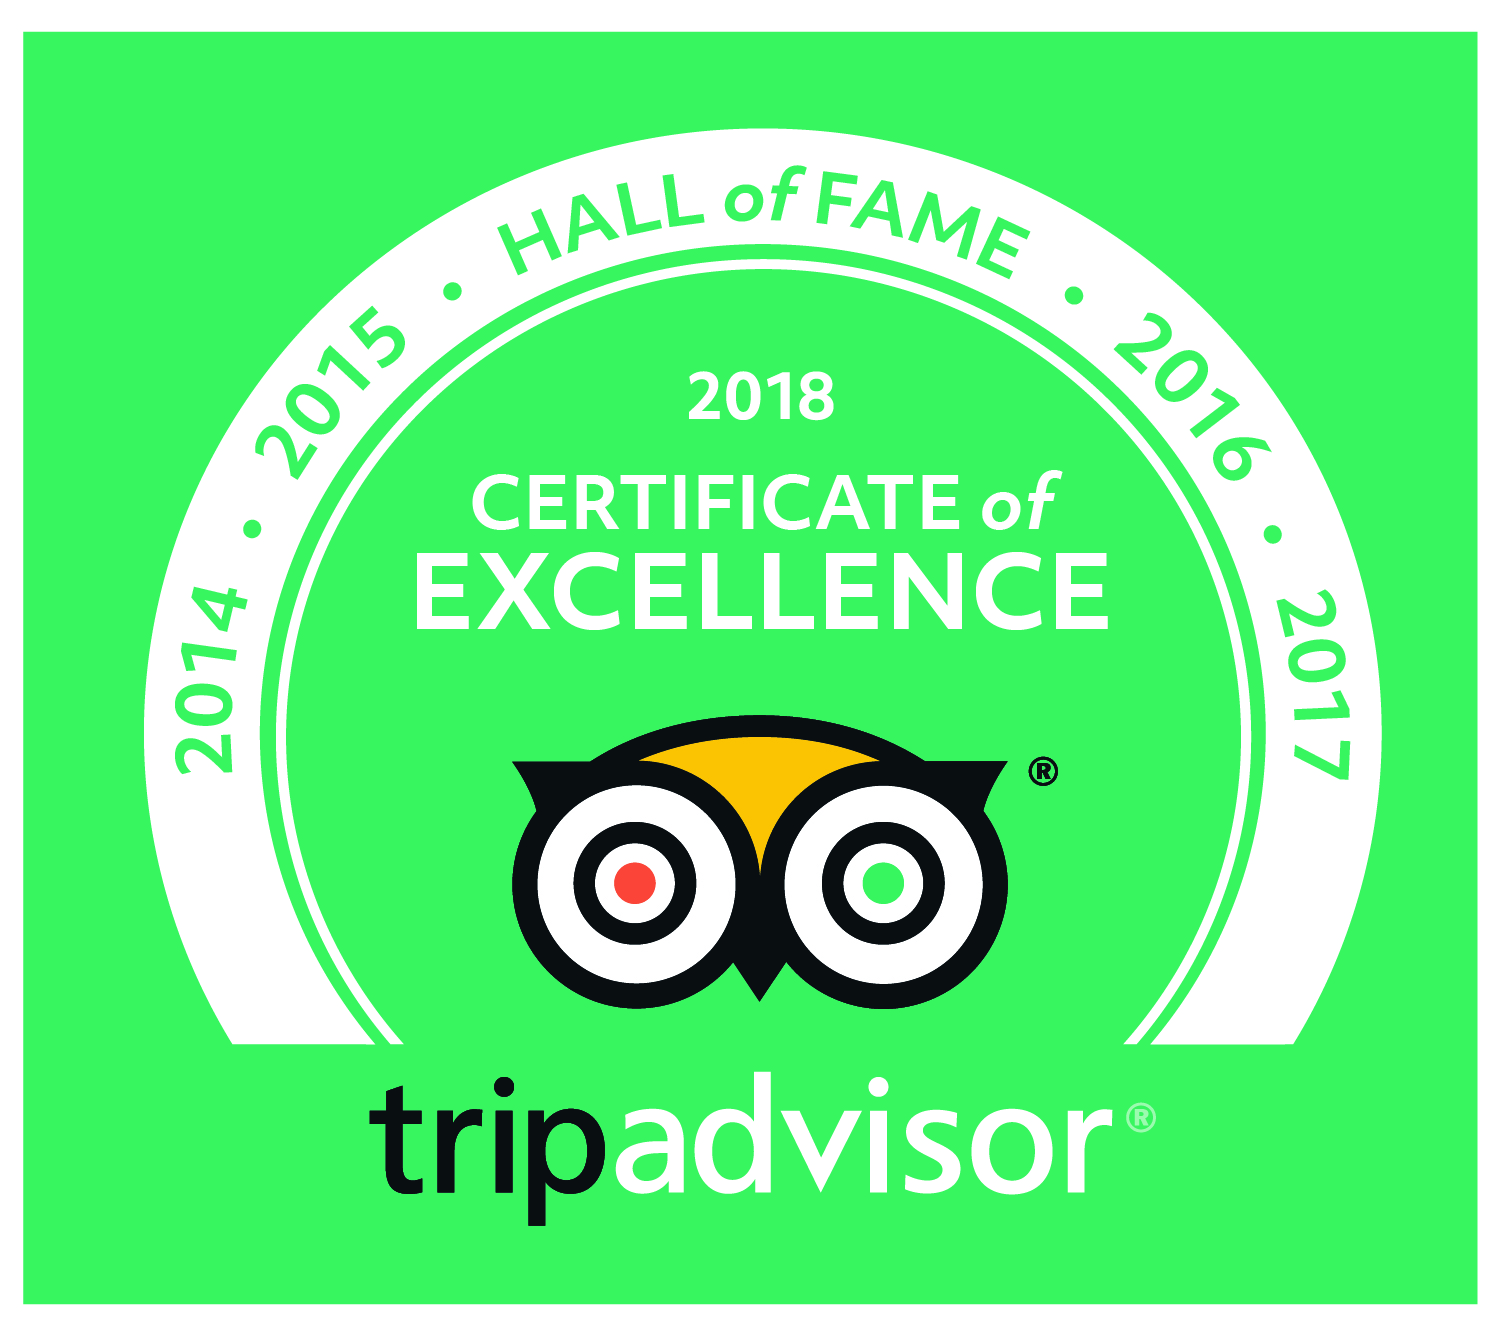 Tripadvisor Certificate Of Excellence 2018